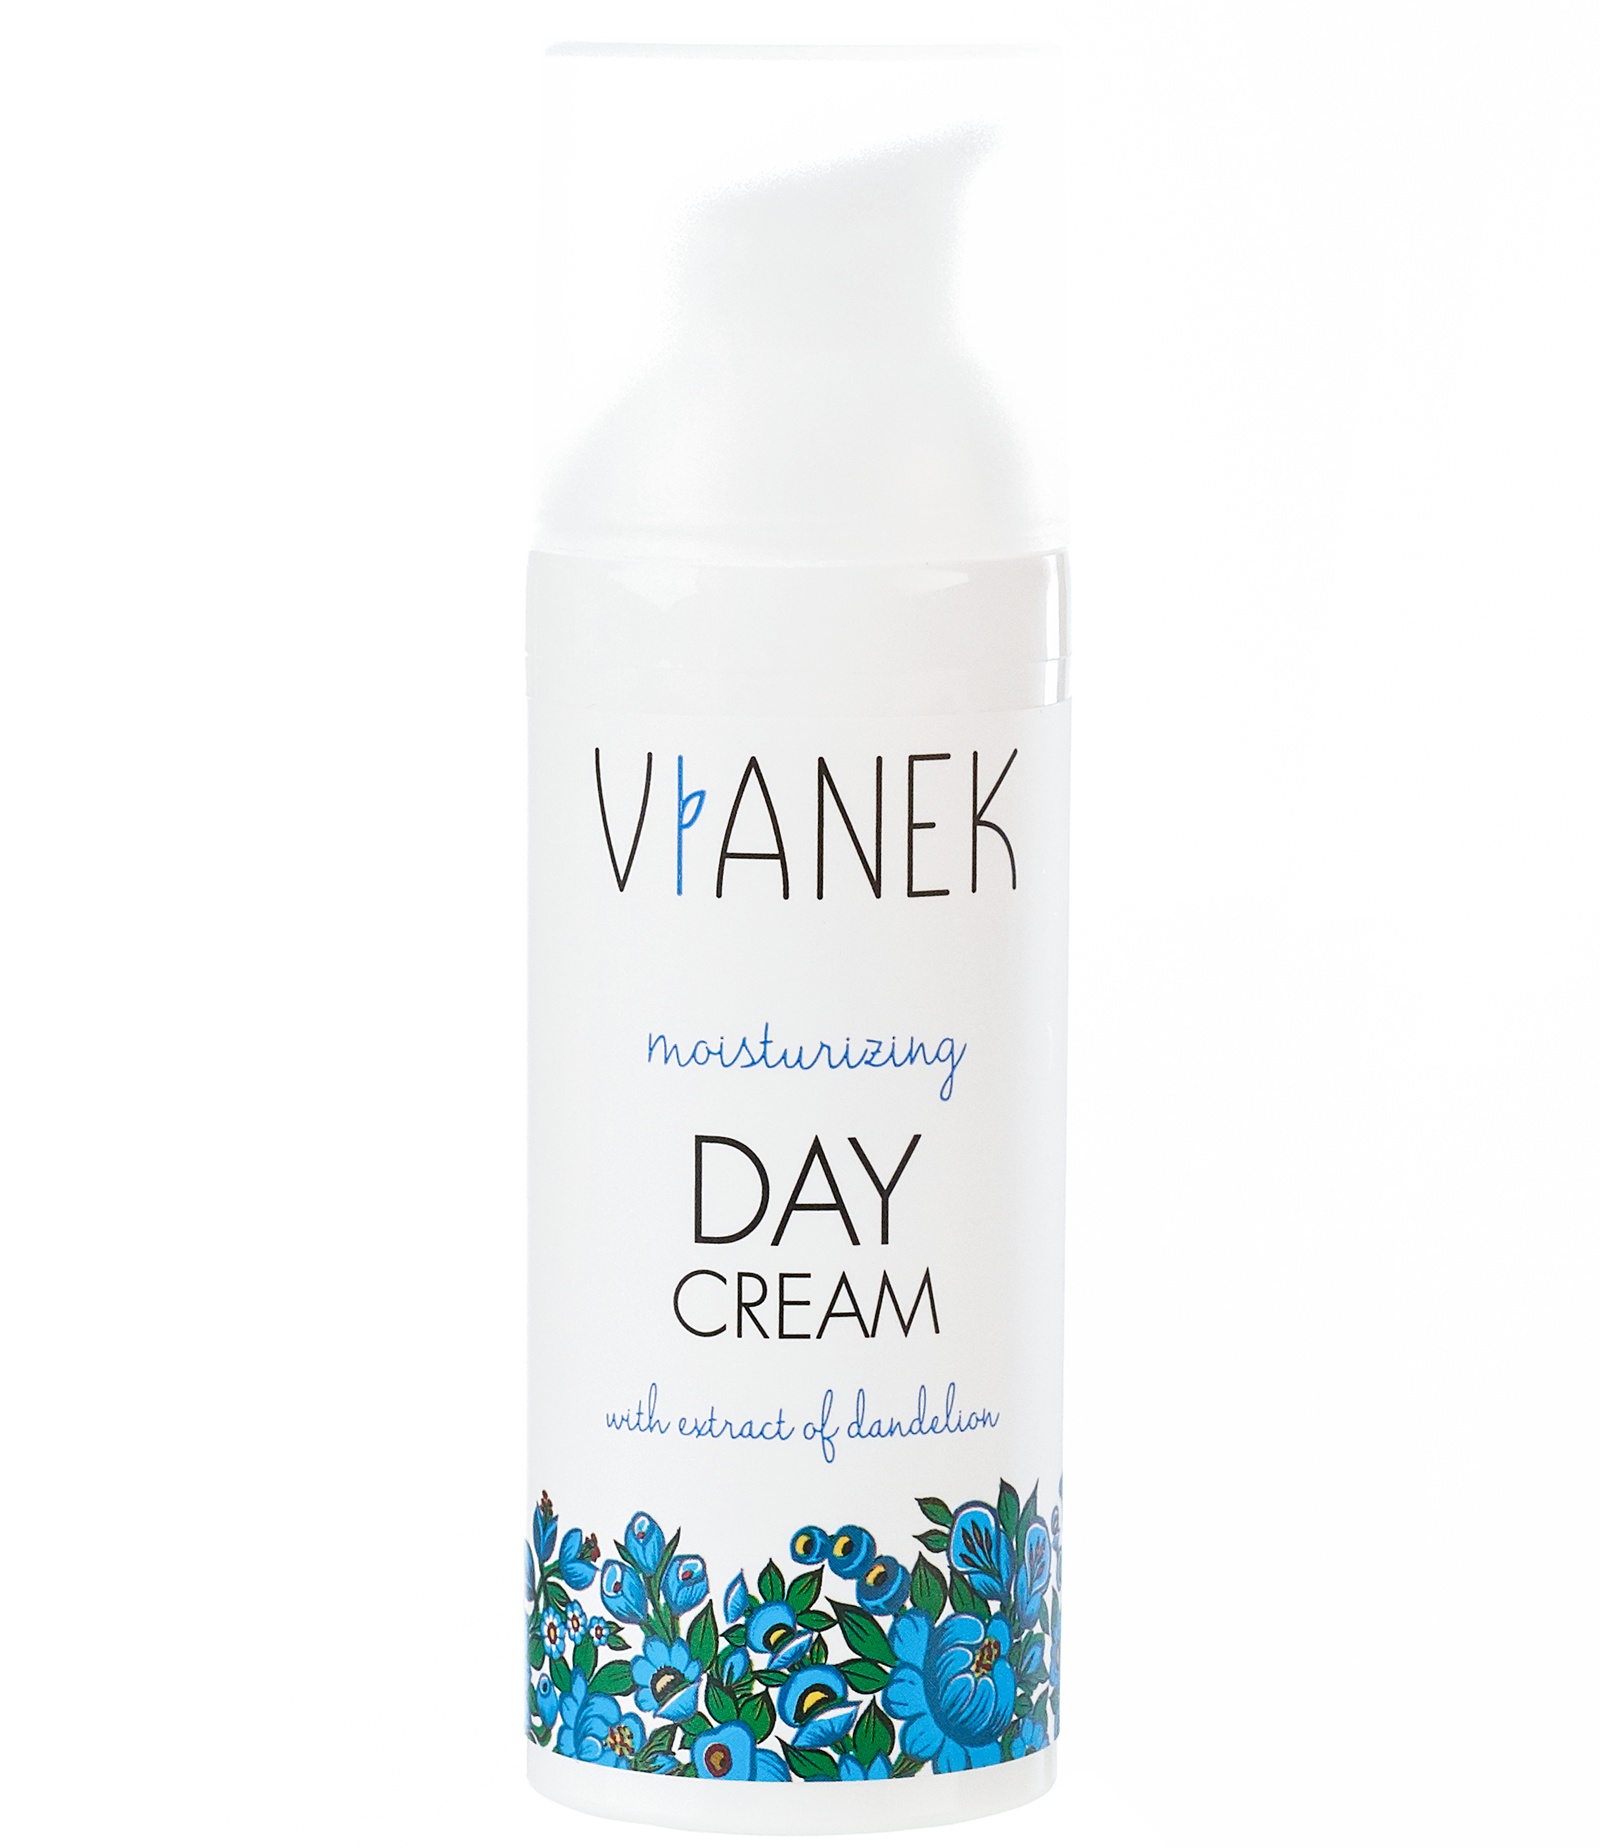 Vianek Moisturizing Day Cream